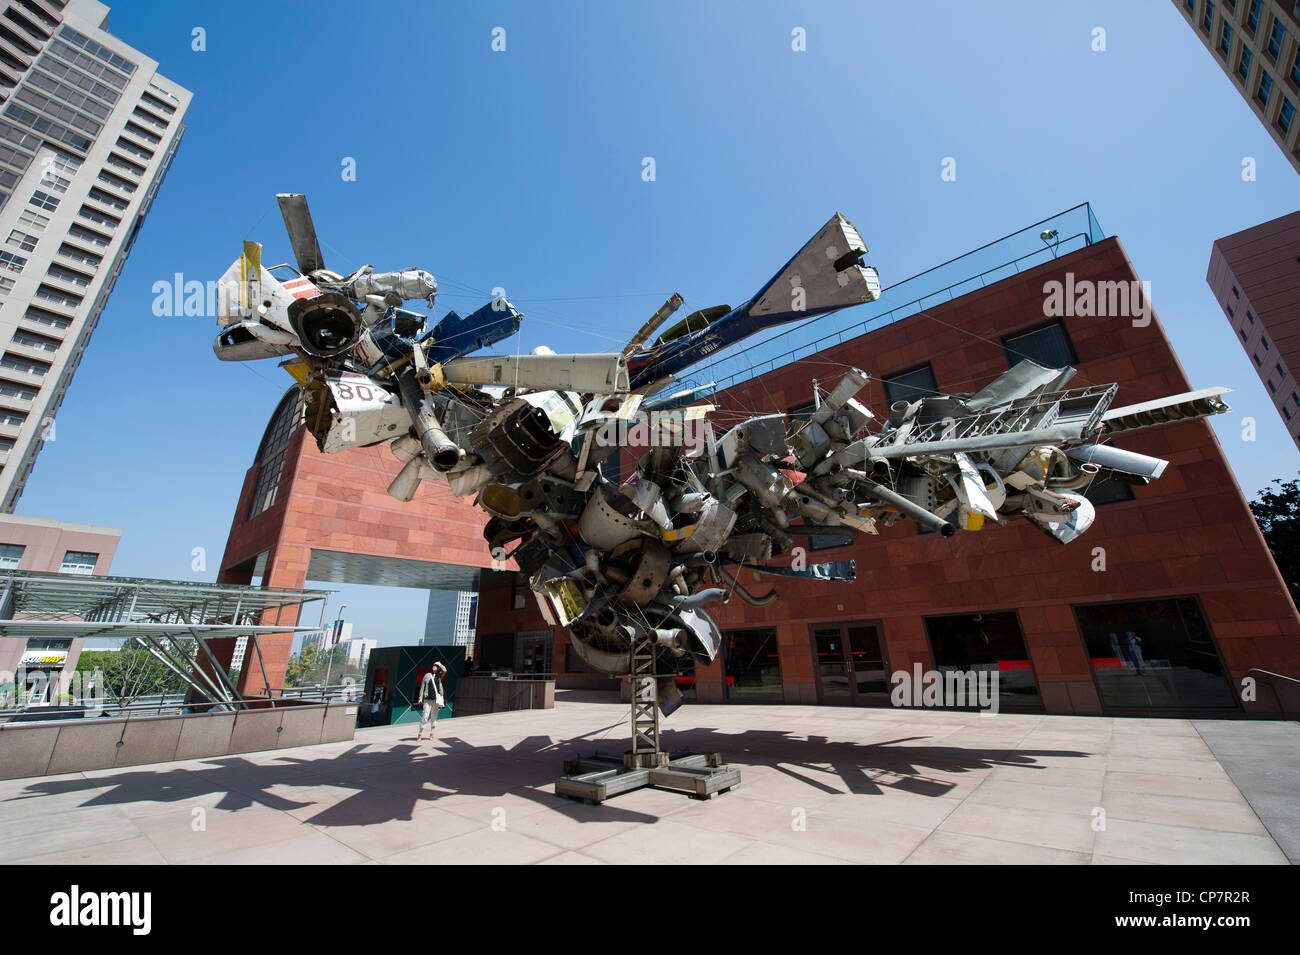 MOCA - Museum of Contemporary Art in Los Angeles Stock Photo